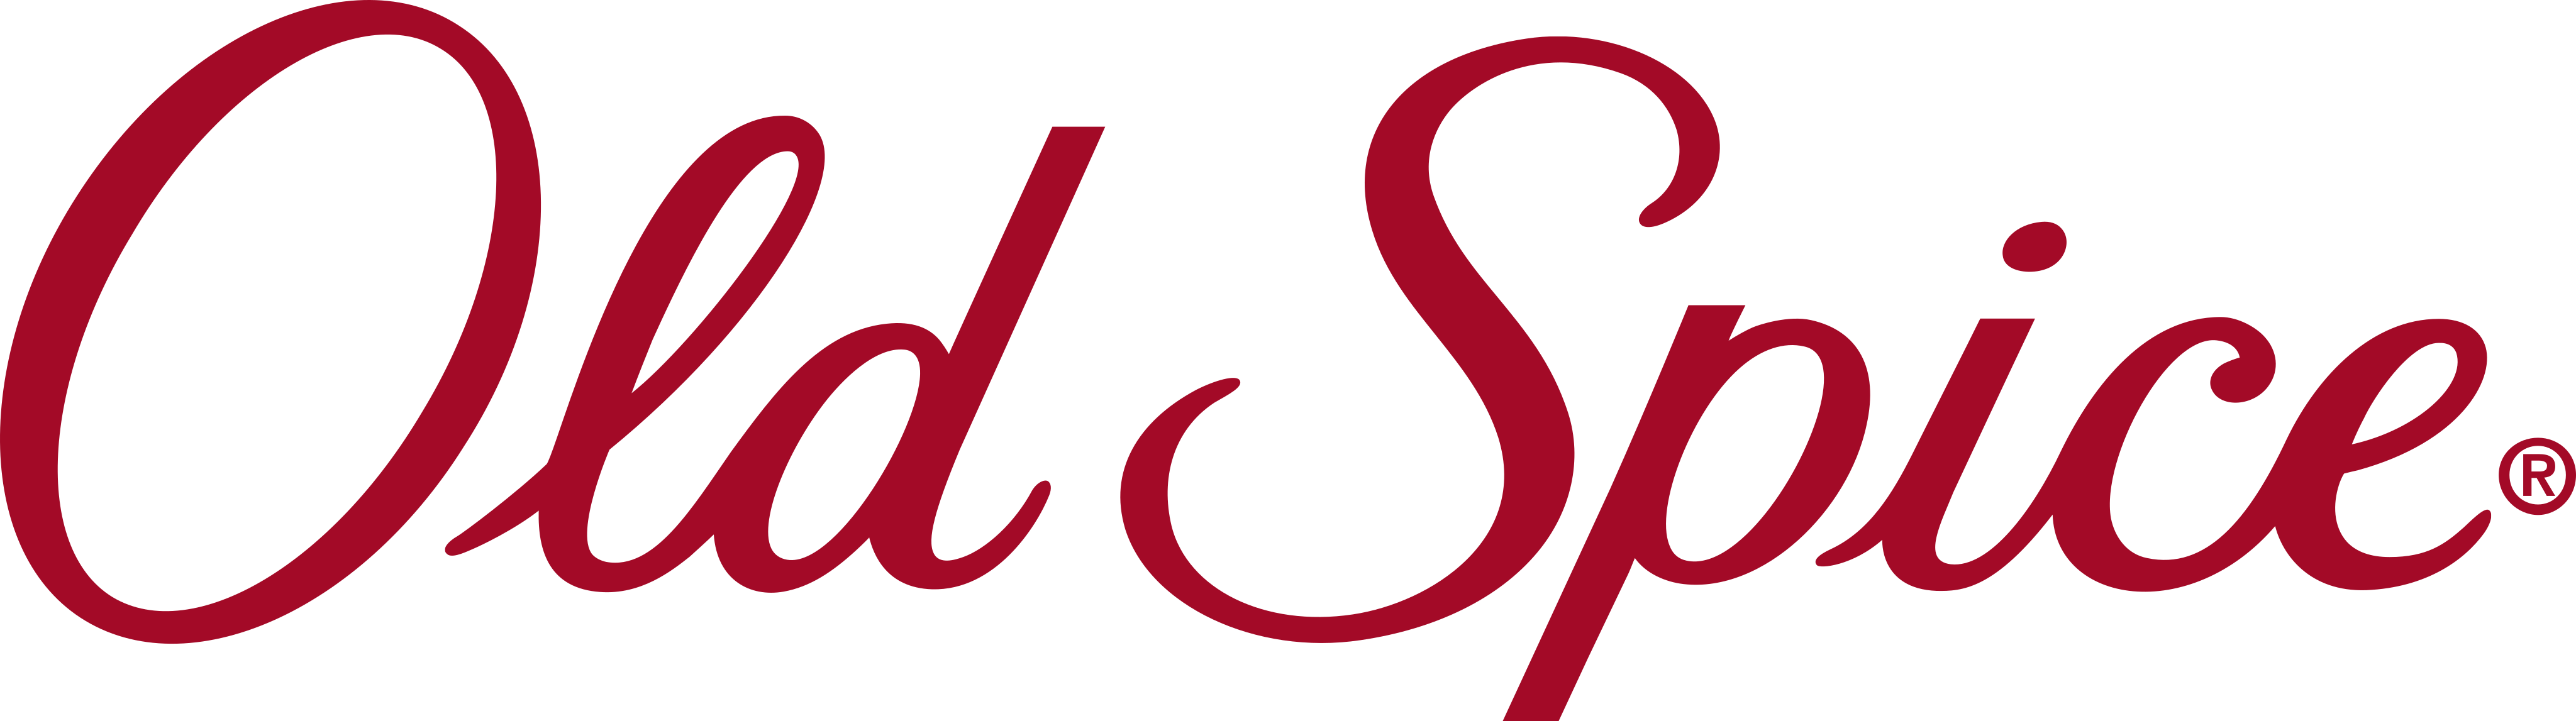 oldspice logo - Old Spice Logo